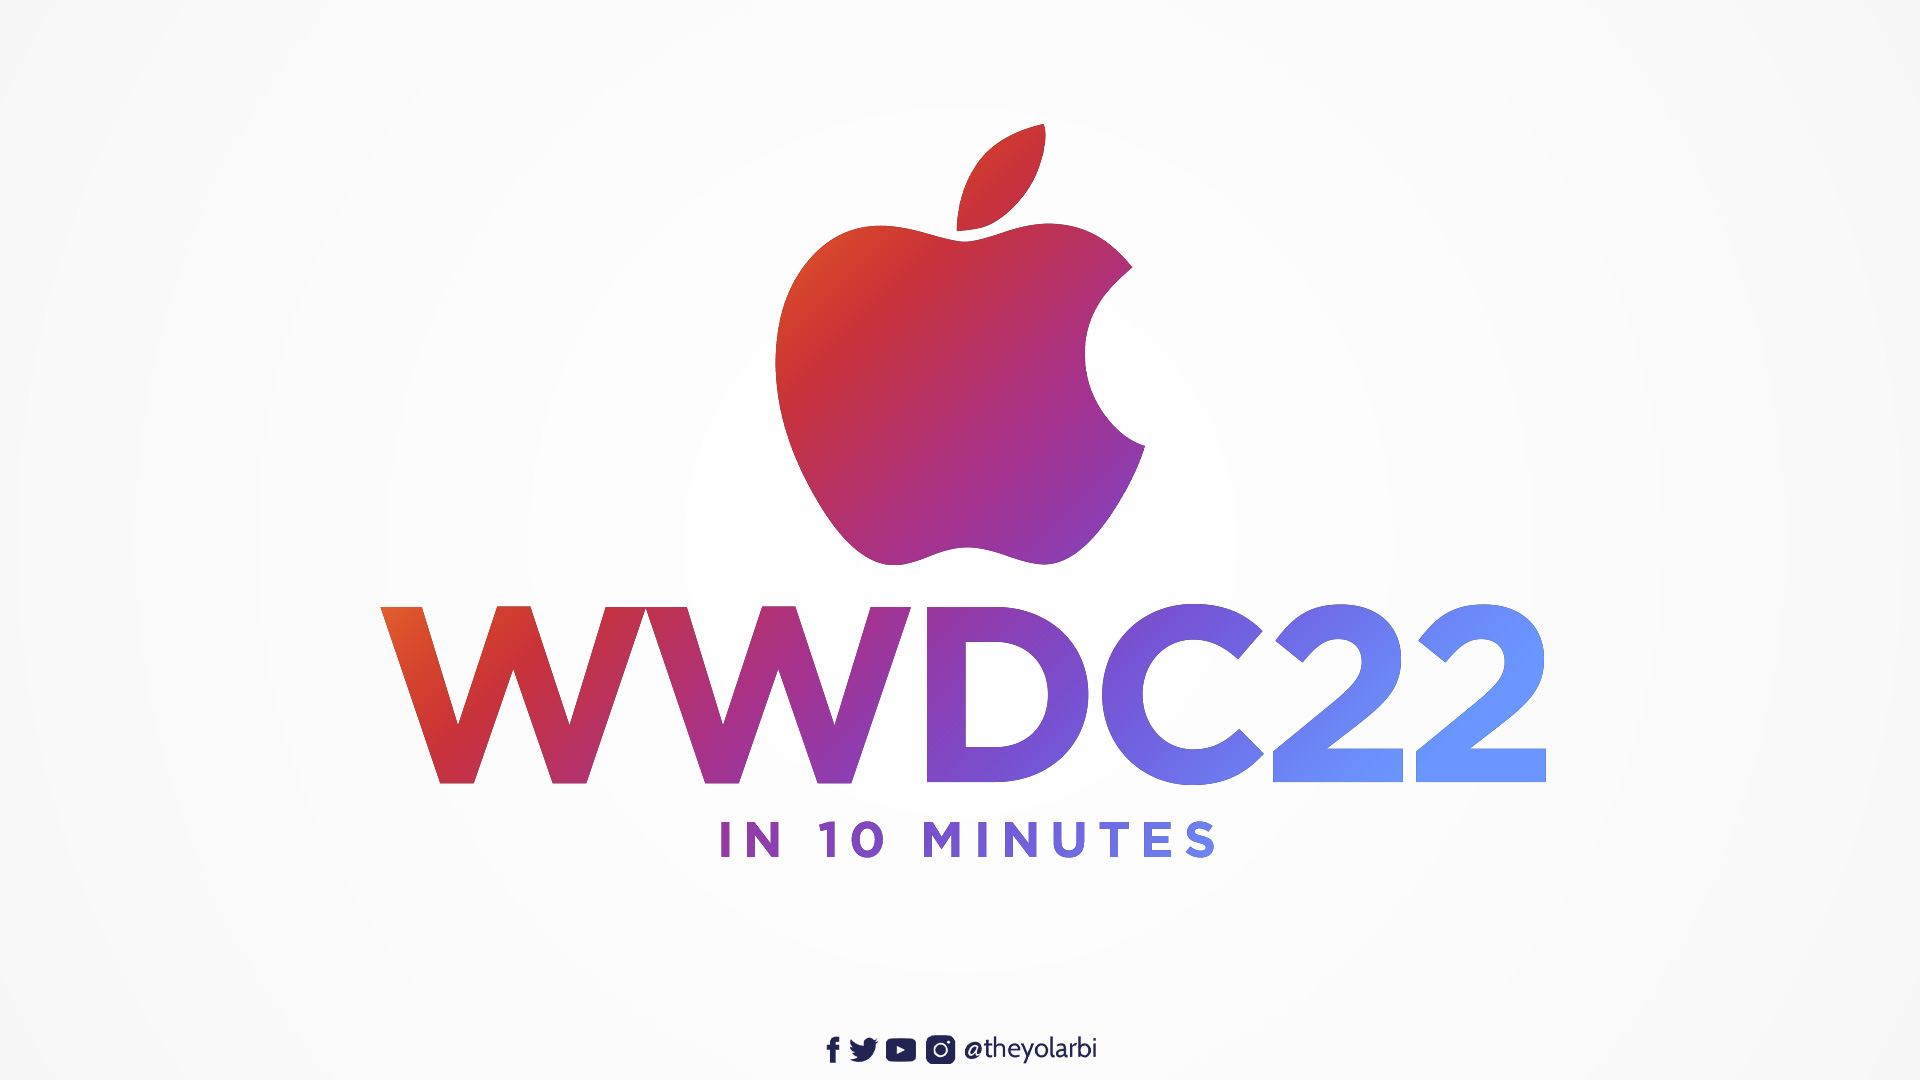 WWDC 2022 in 10 minutes